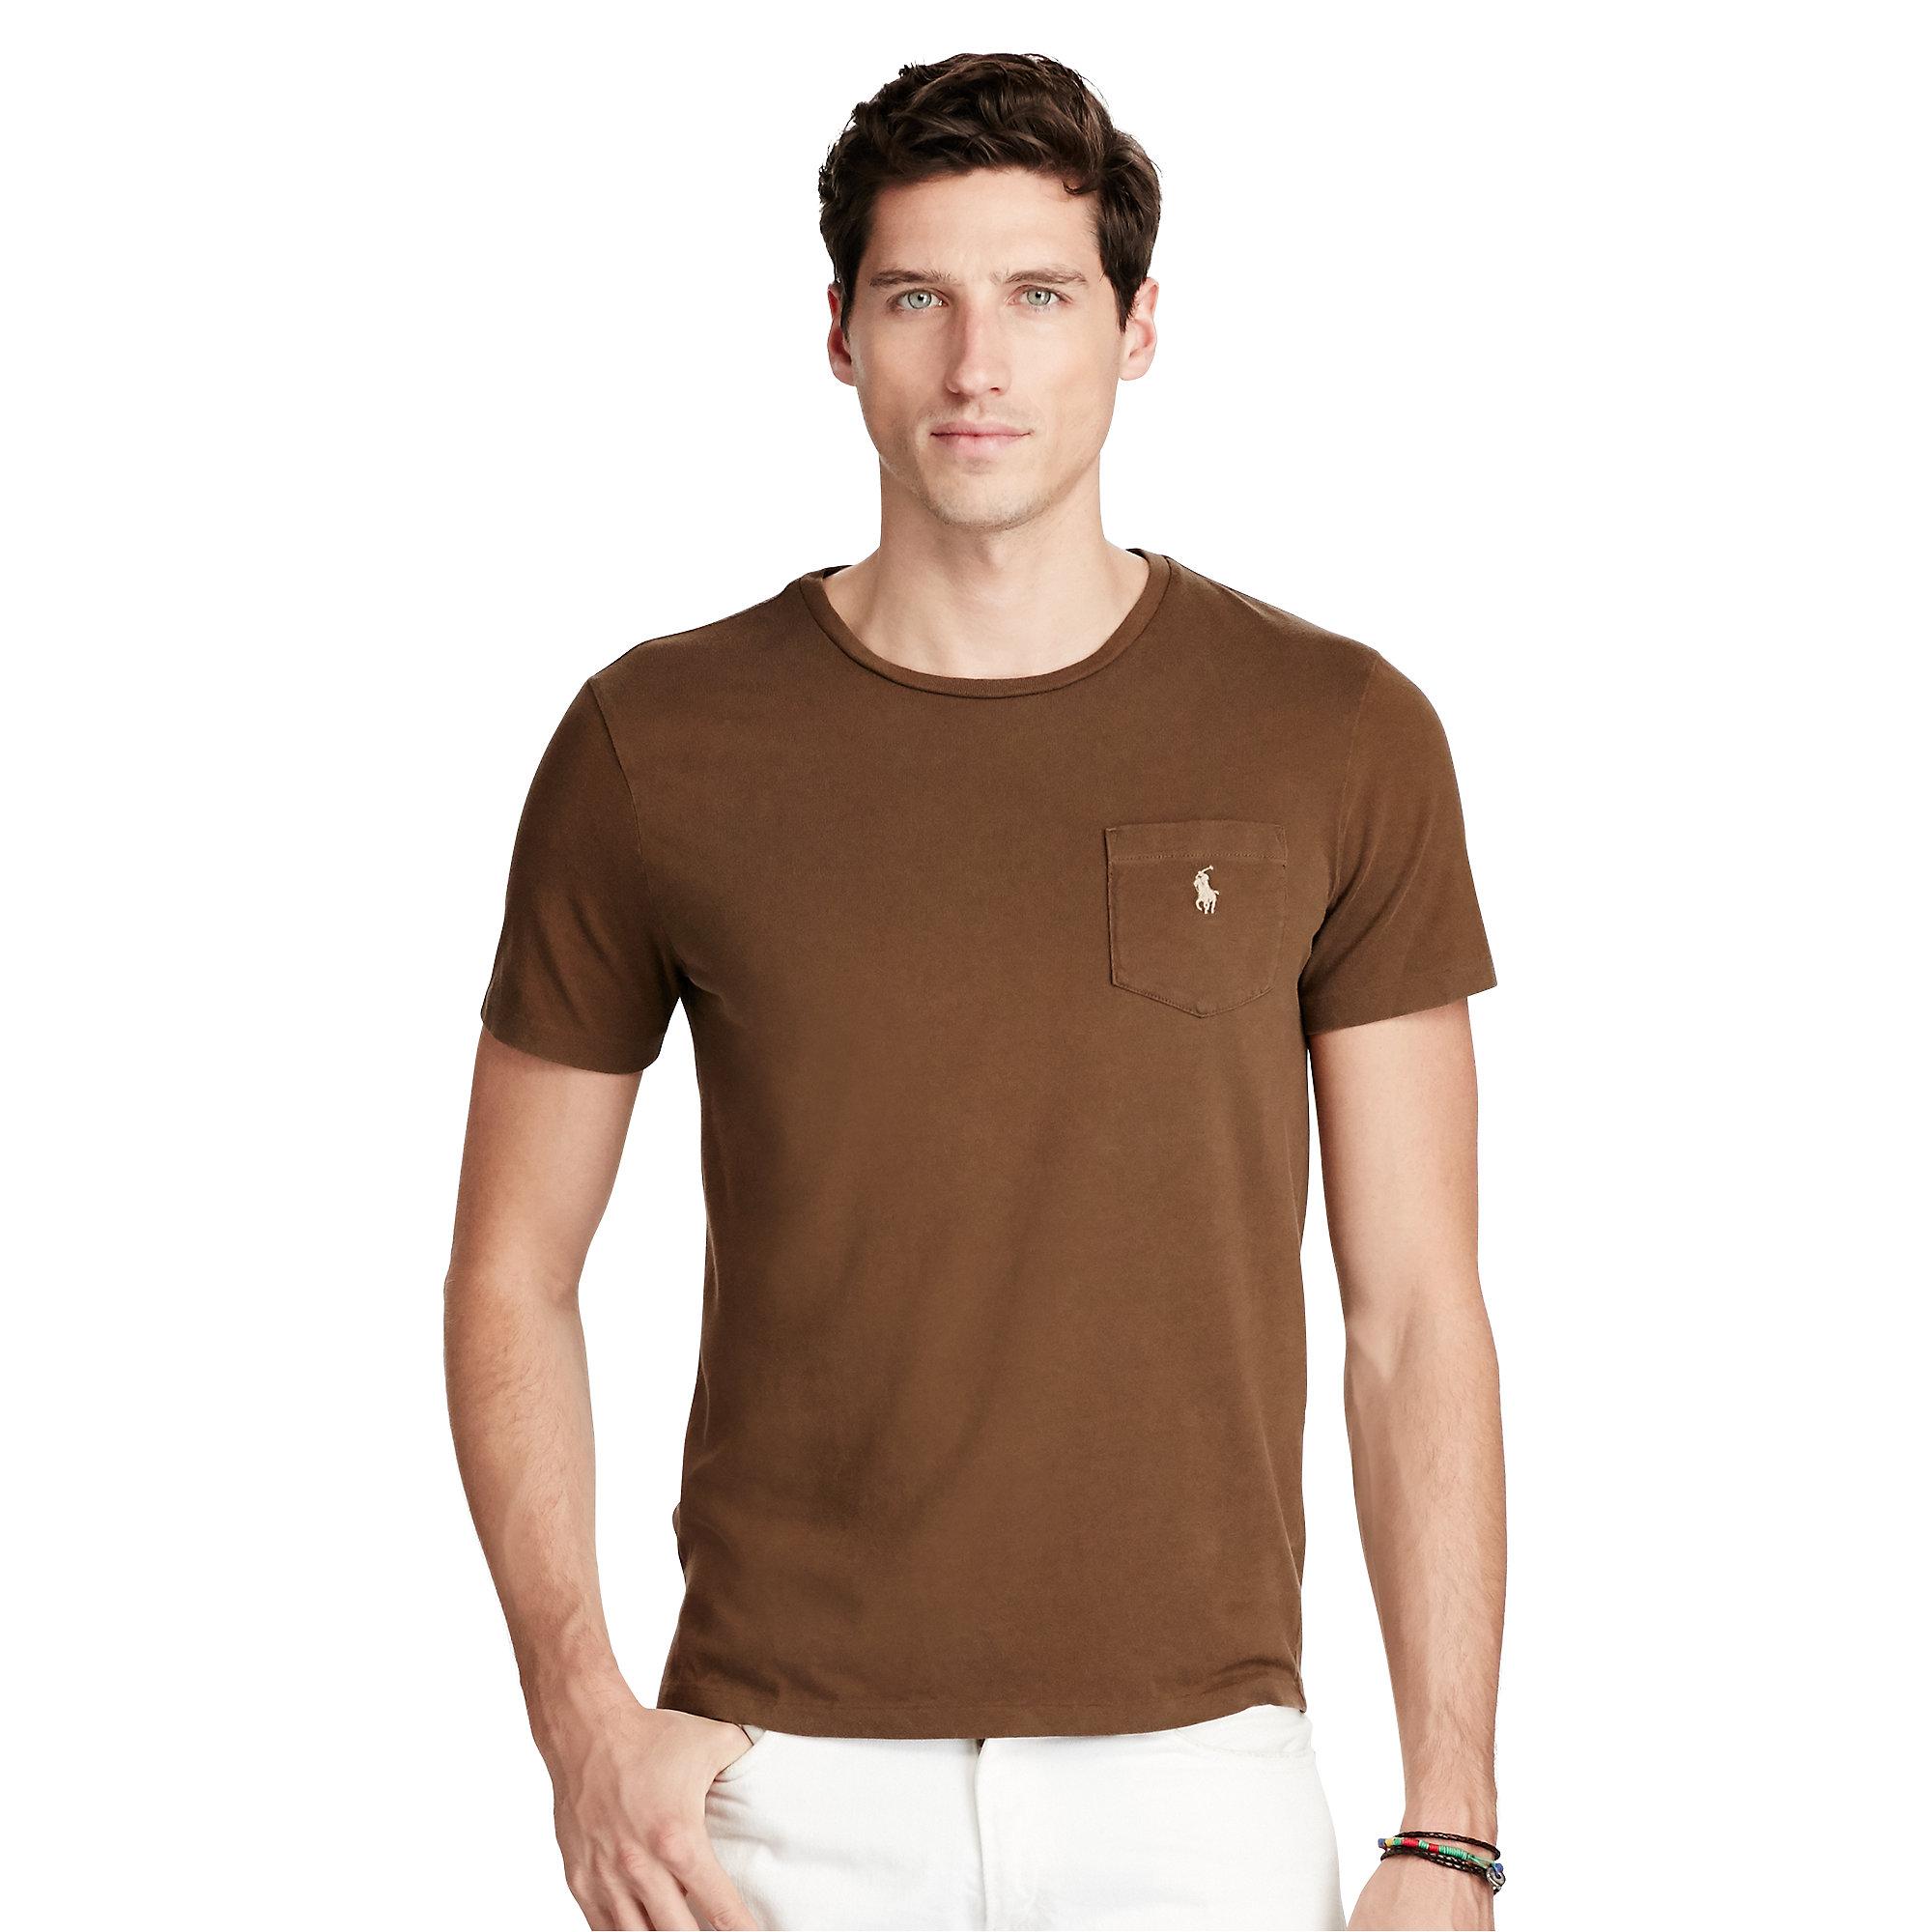 Lyst - Polo Ralph Lauren Custom Fit Cotton T-shirt in Brown for Men